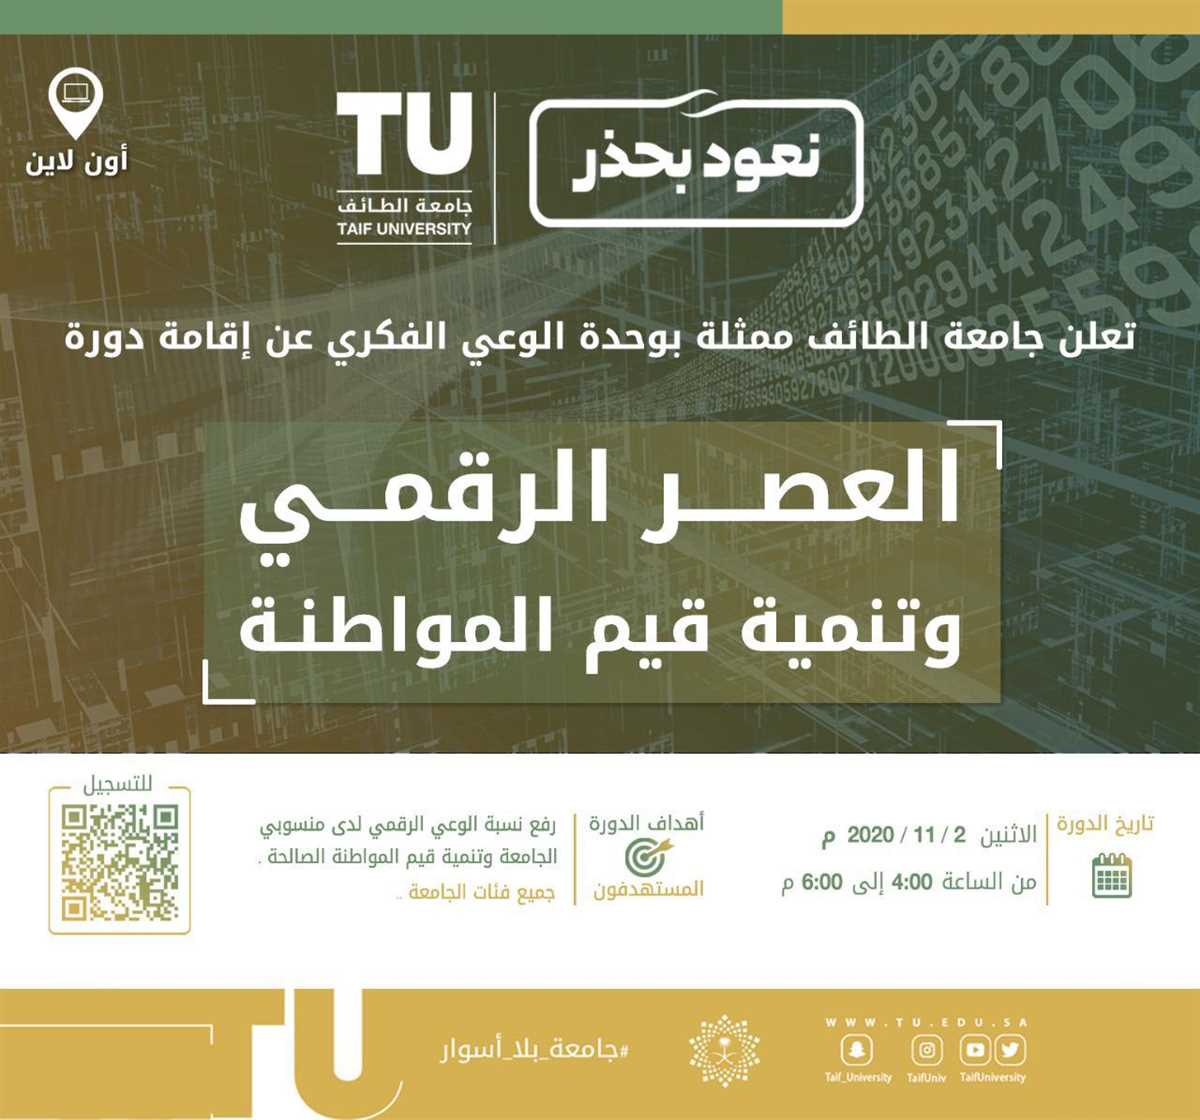 The Intellectual Awareness Unit announces the establishment of a training course "Digital Age and Citizenship Development"